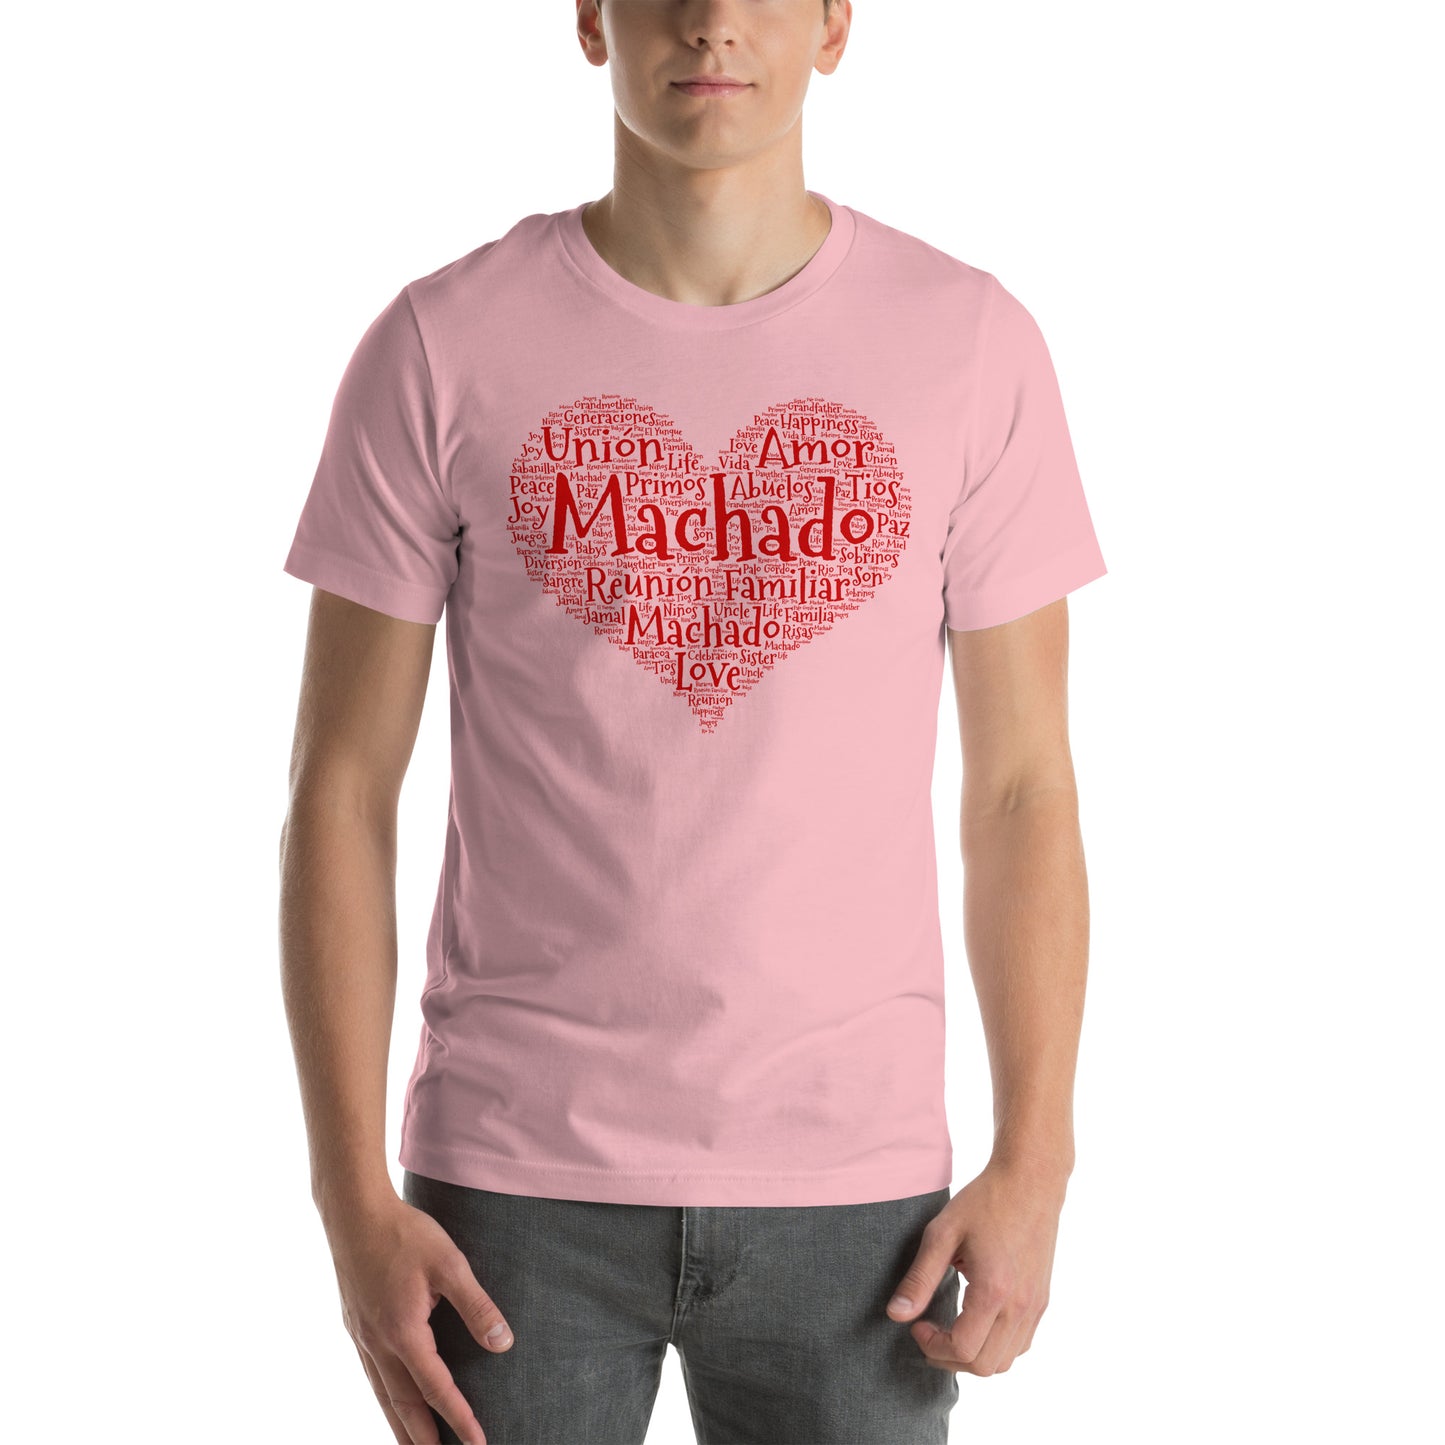 MACHADO FAMILY Unisex t-shirt